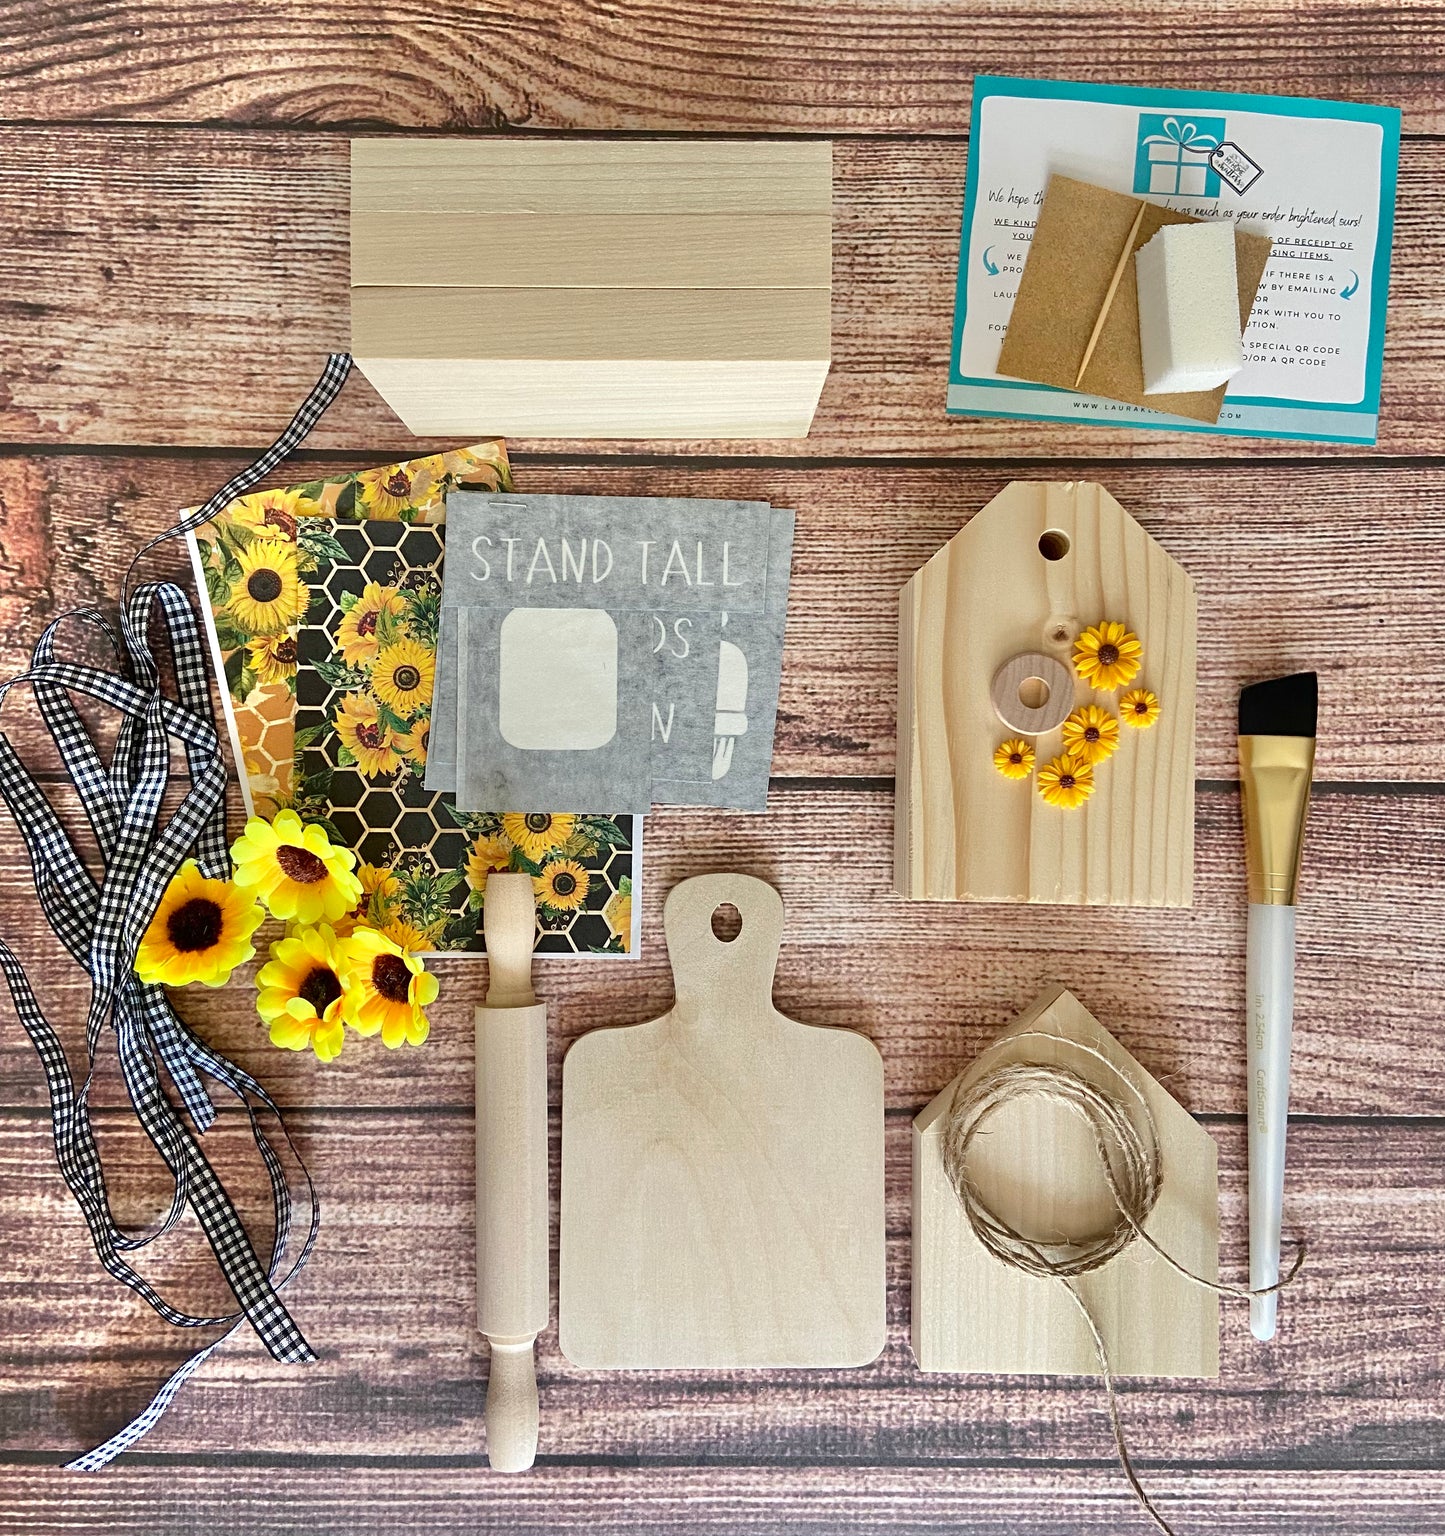 DIY Tiered Tray Set - Sunflower Theme